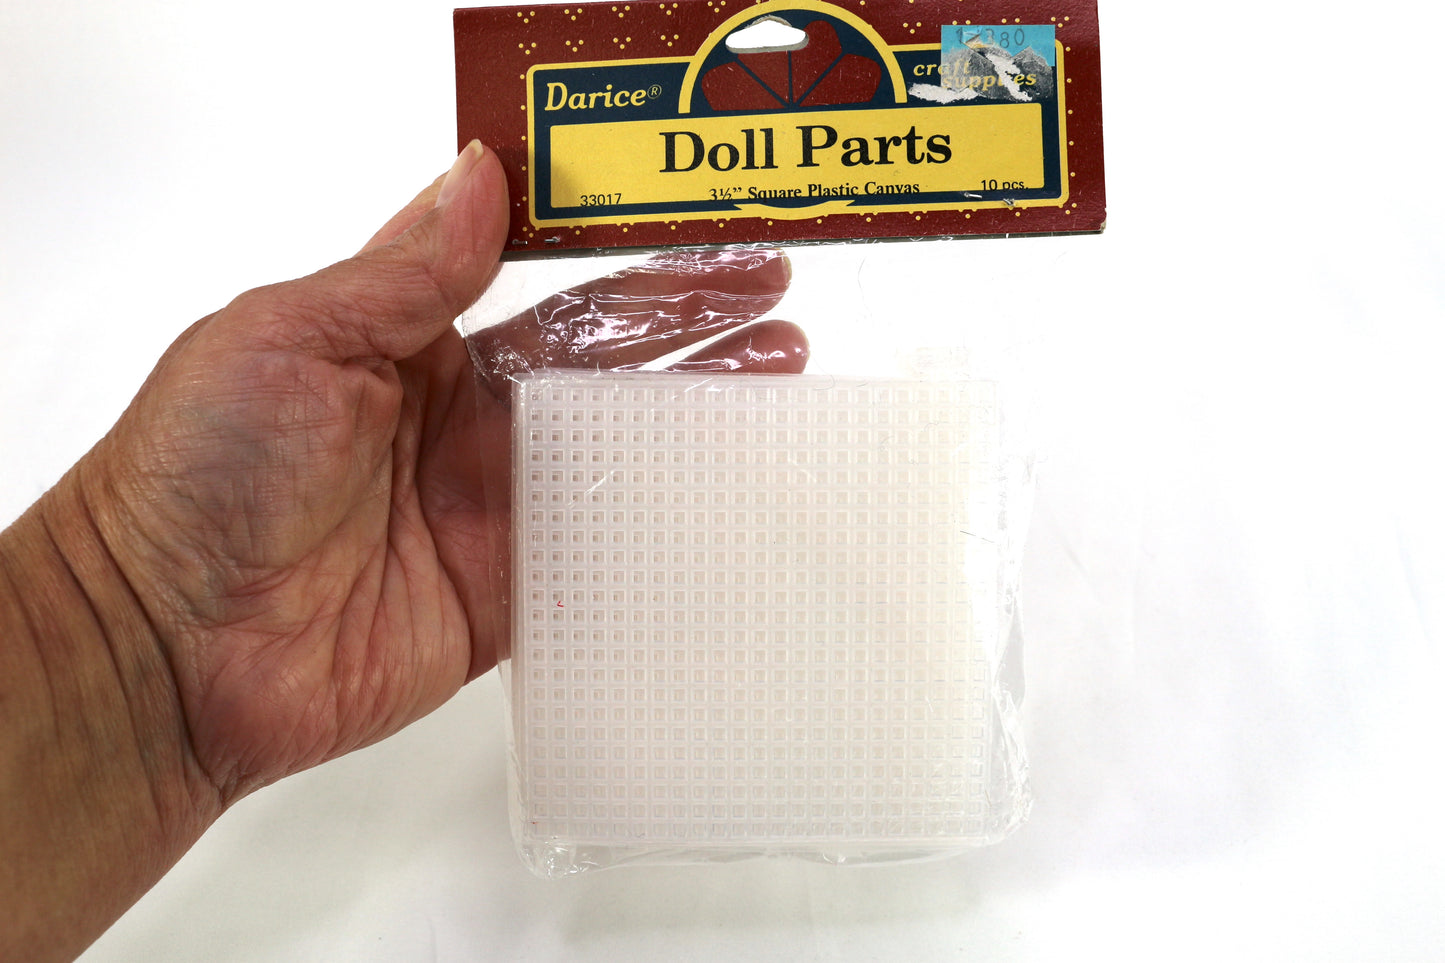 Darice Doll Parts 3.5" Plastic Canvas